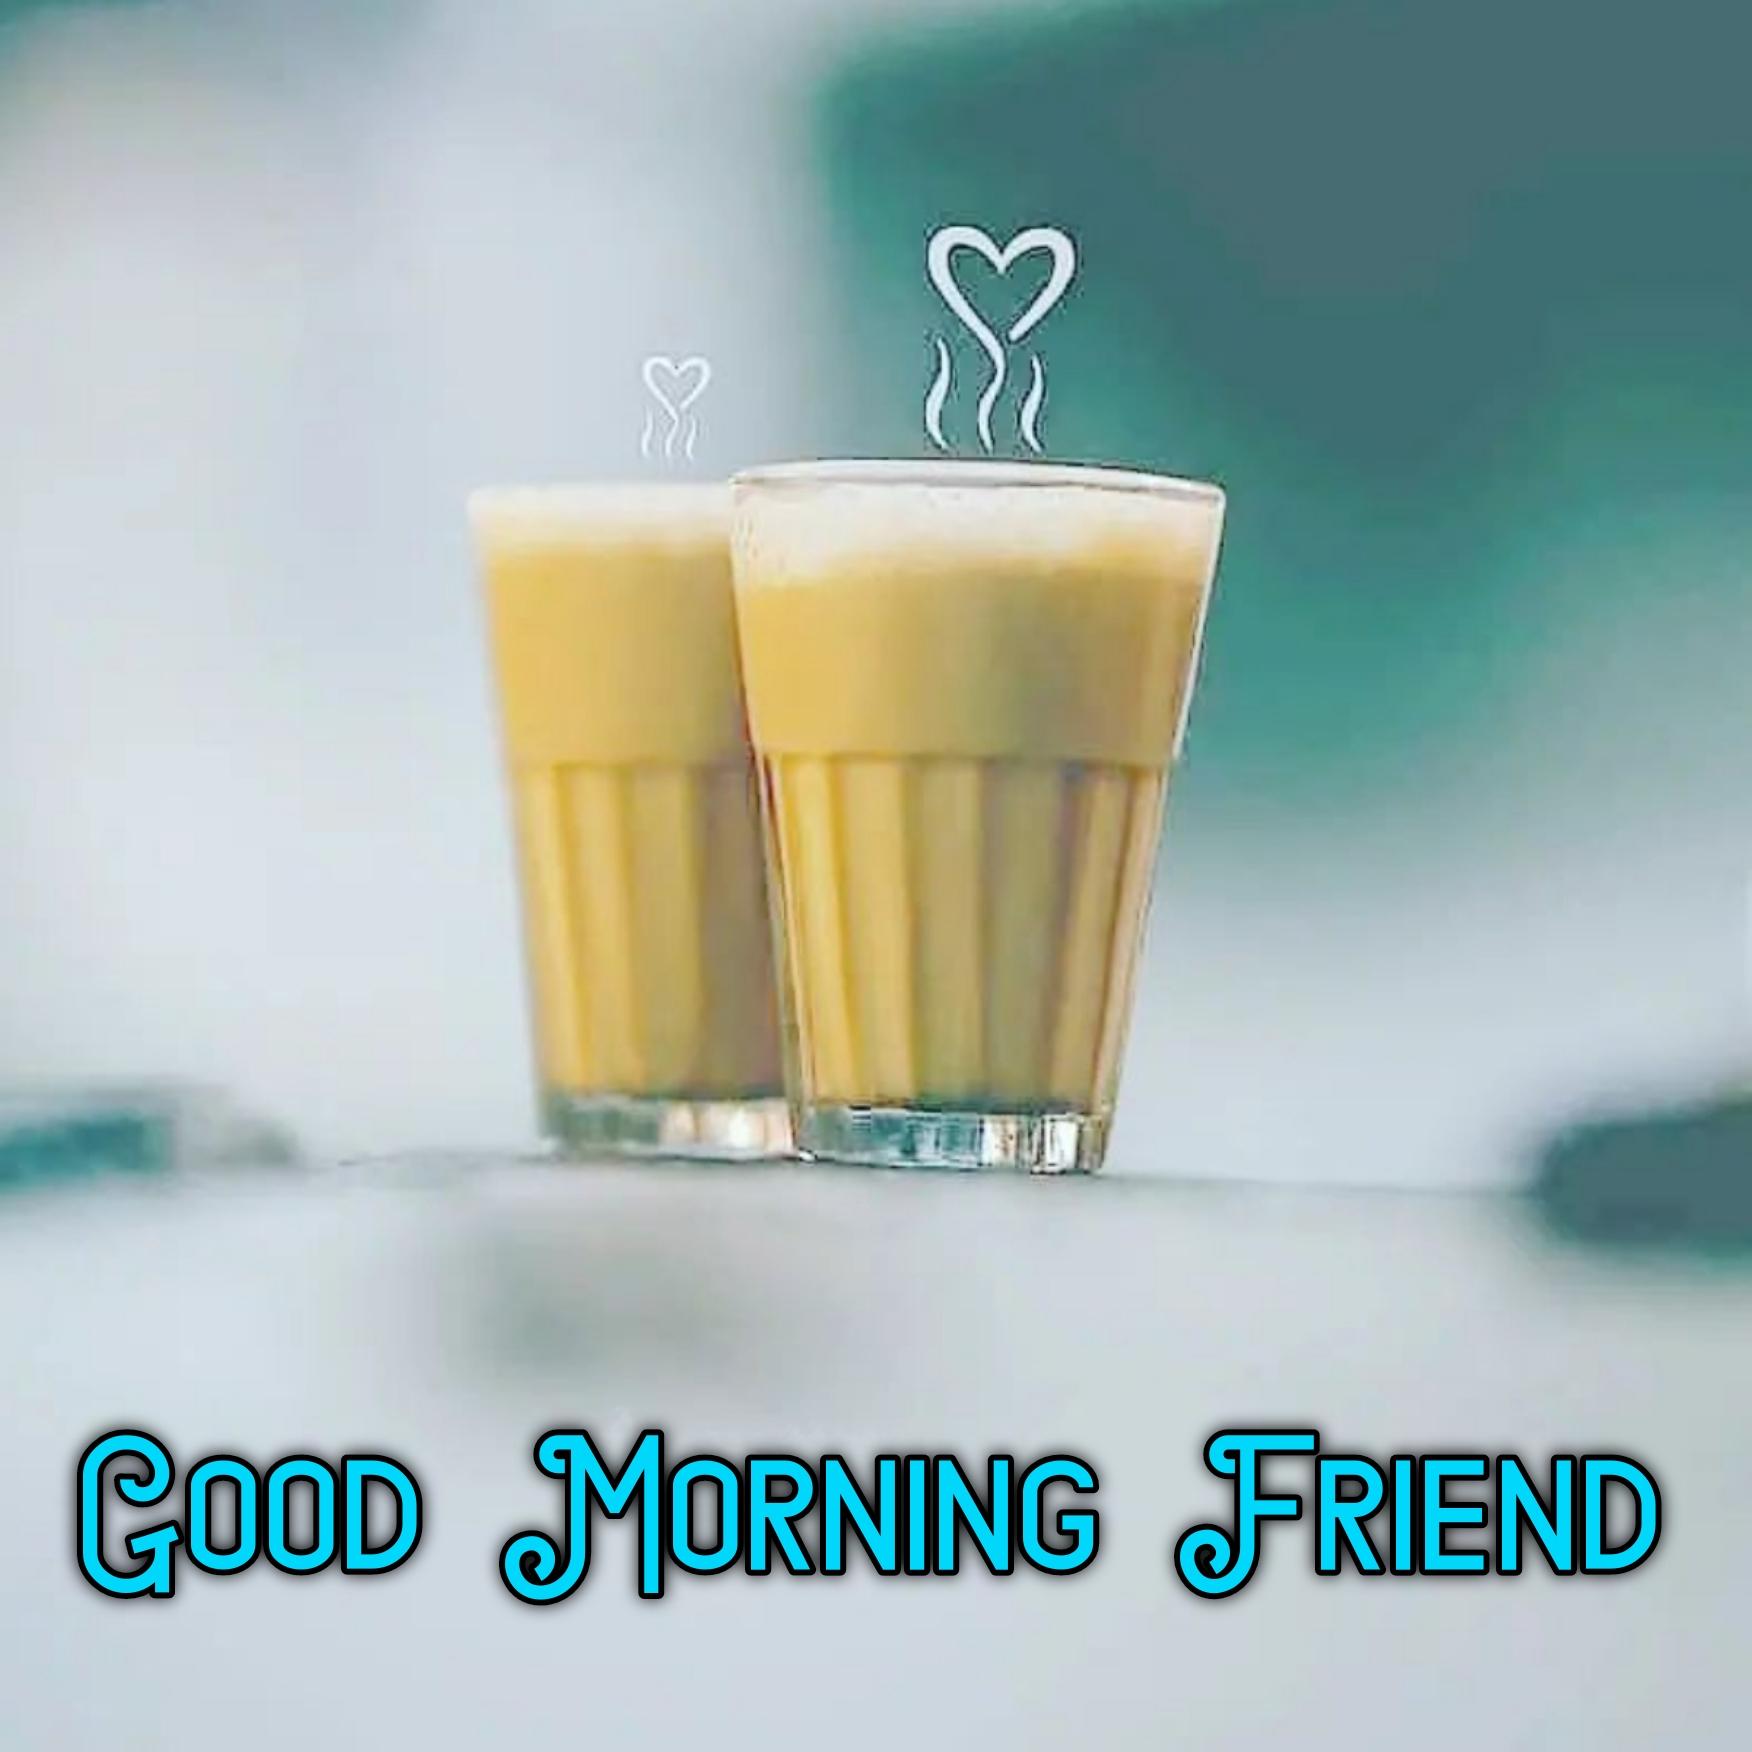 Good Morning Friend Tea Images